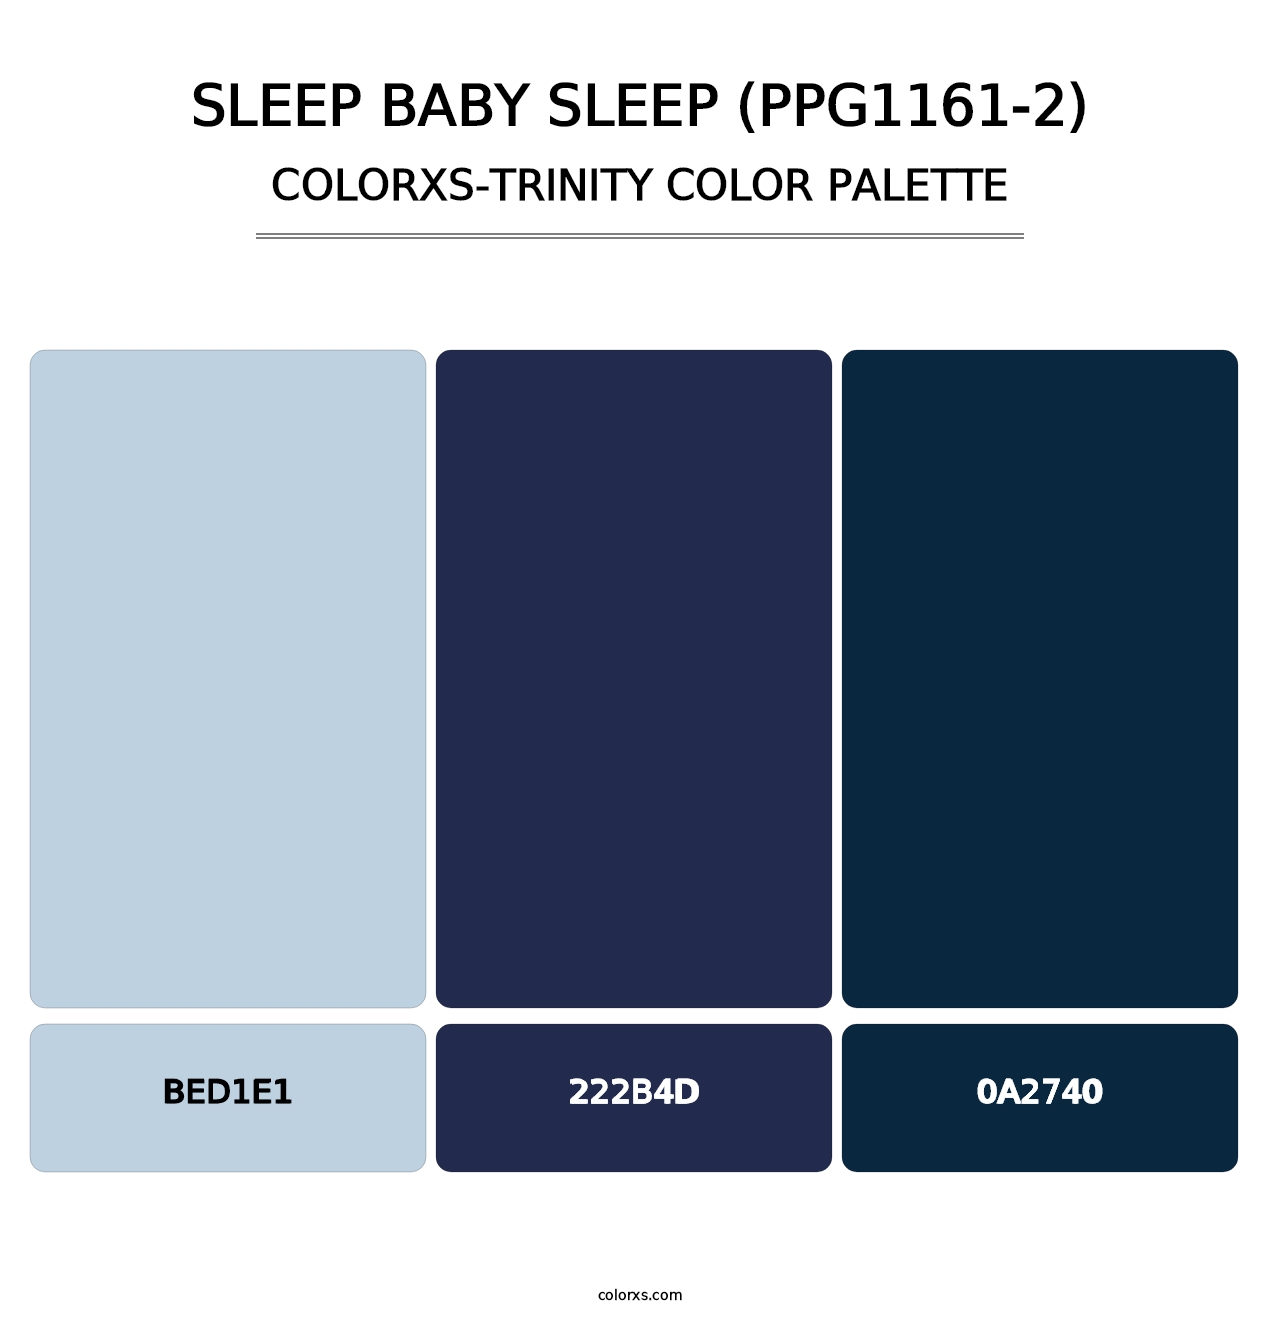 Sleep Baby Sleep (PPG1161-2) - Colorxs Trinity Palette